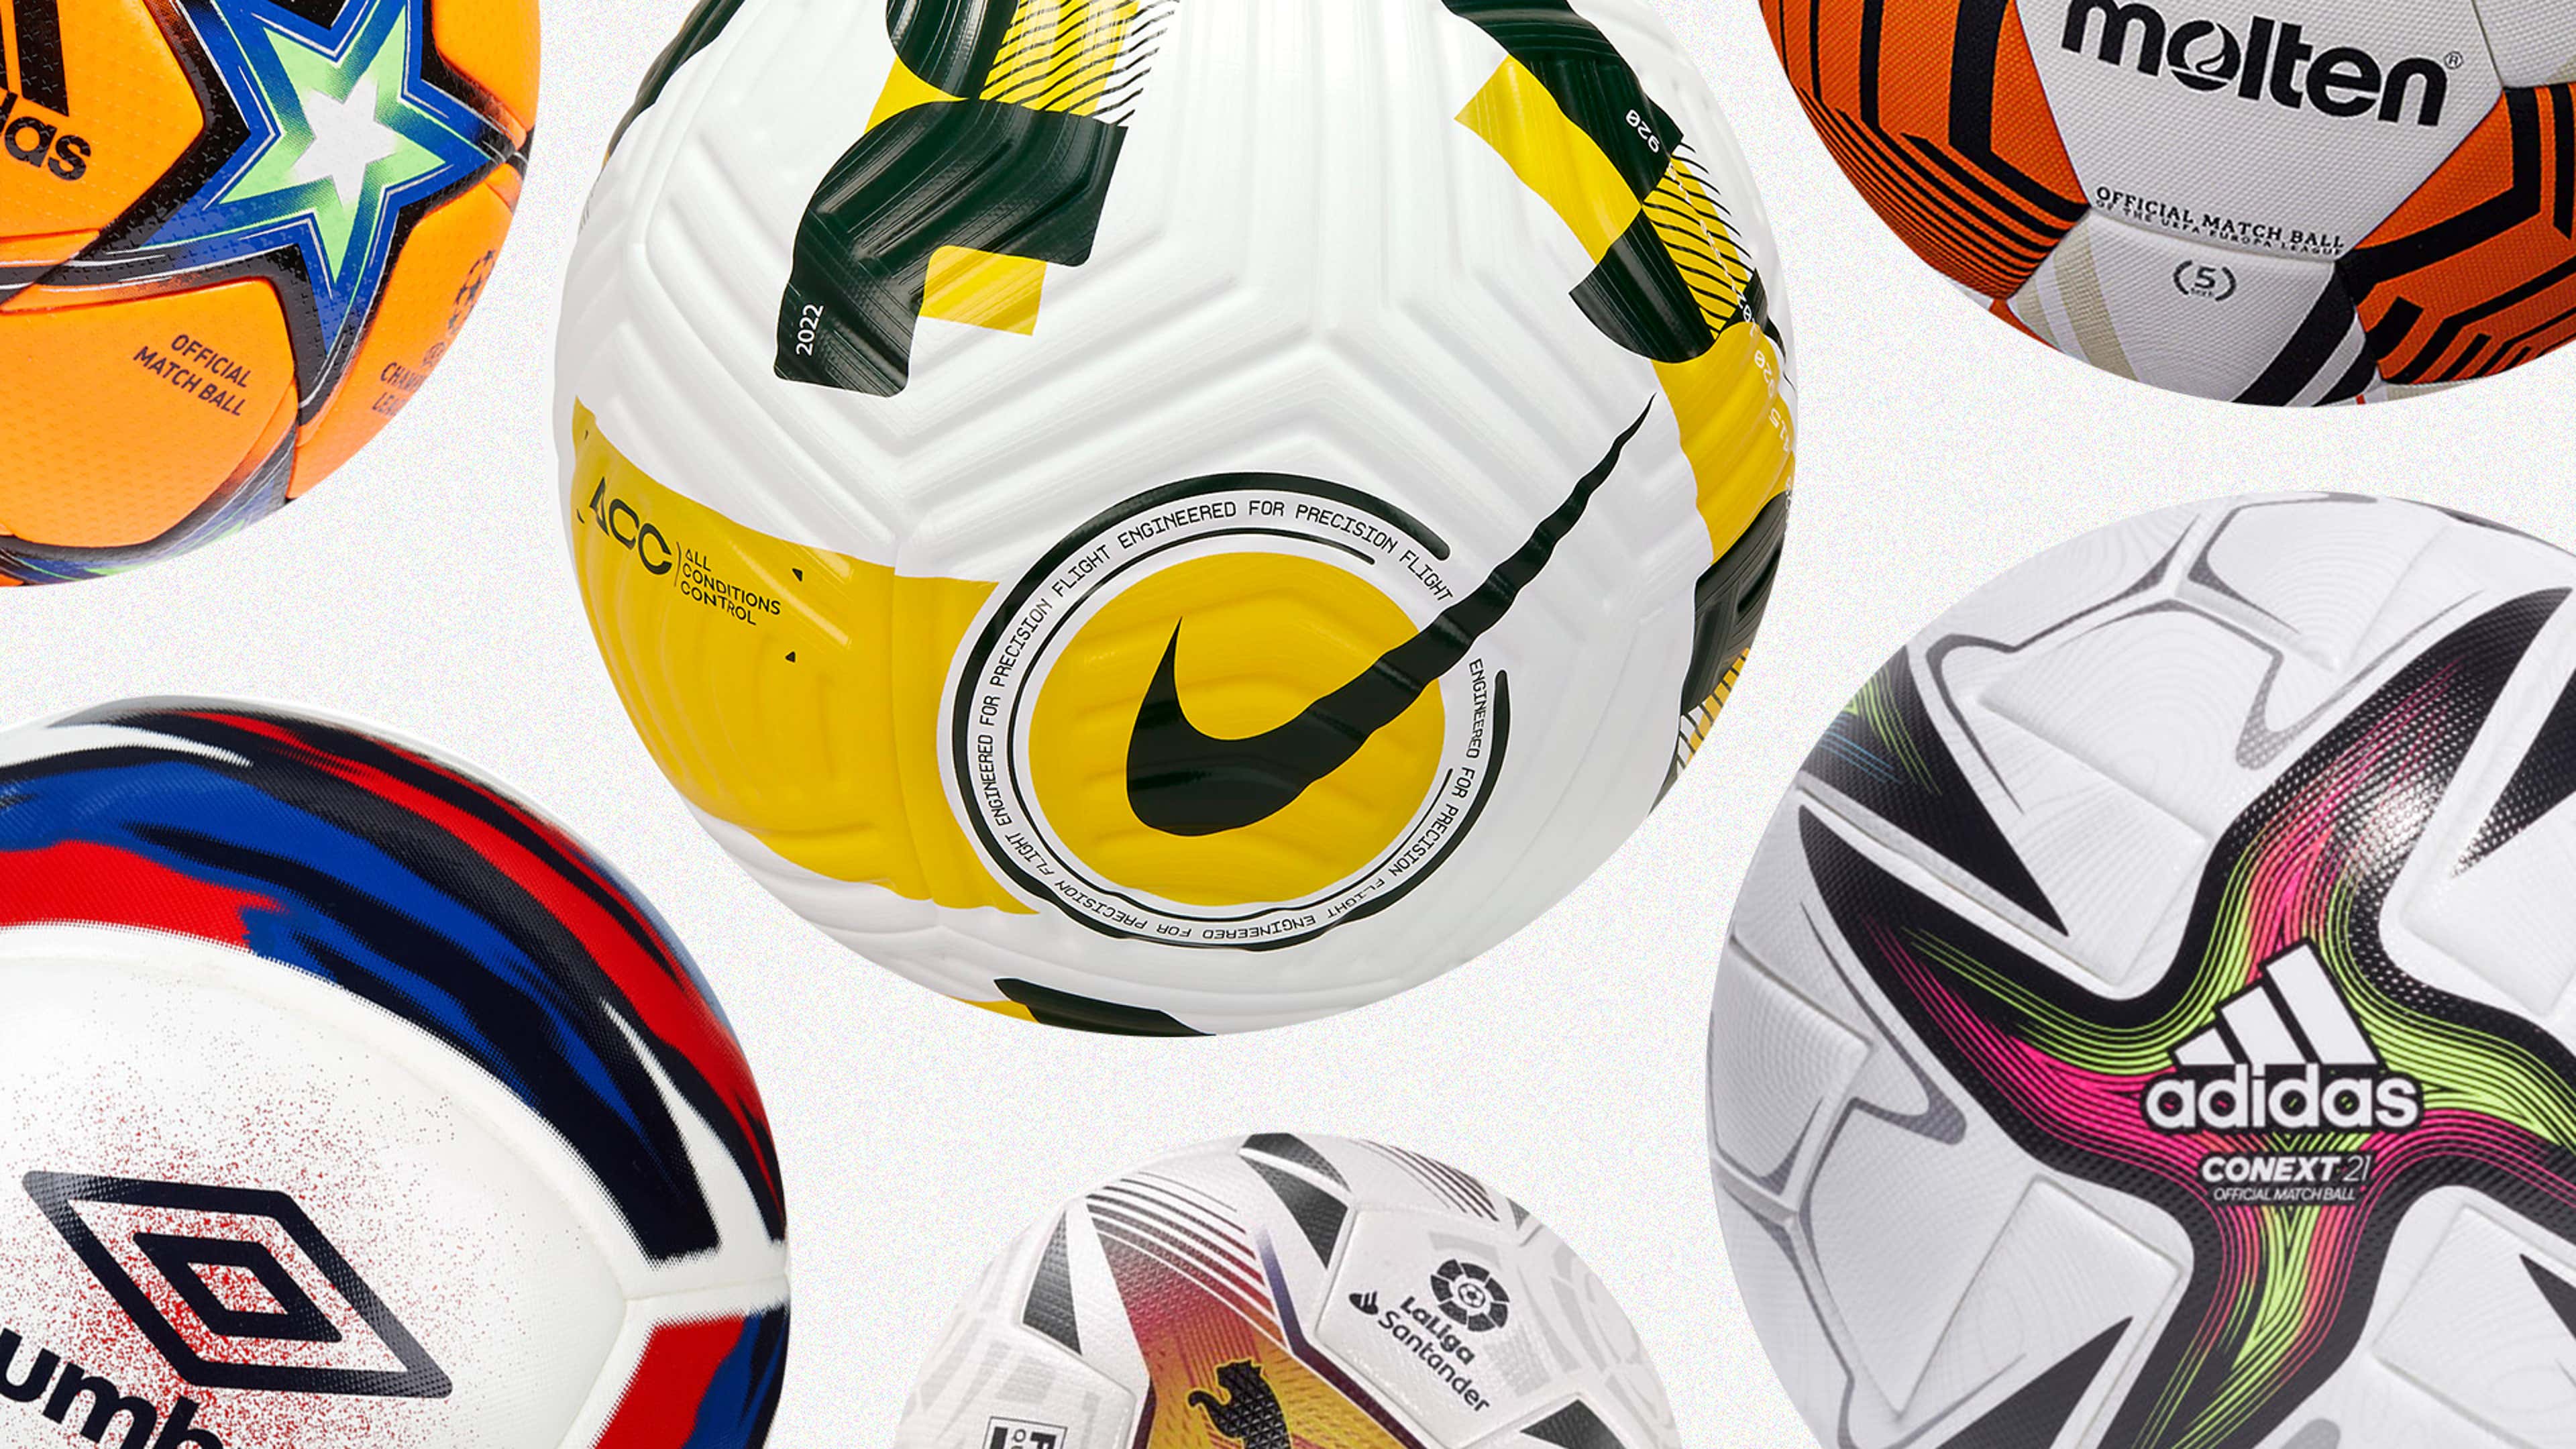  Select Planet Eco-Friendly Soccer Ball, Size 5, White